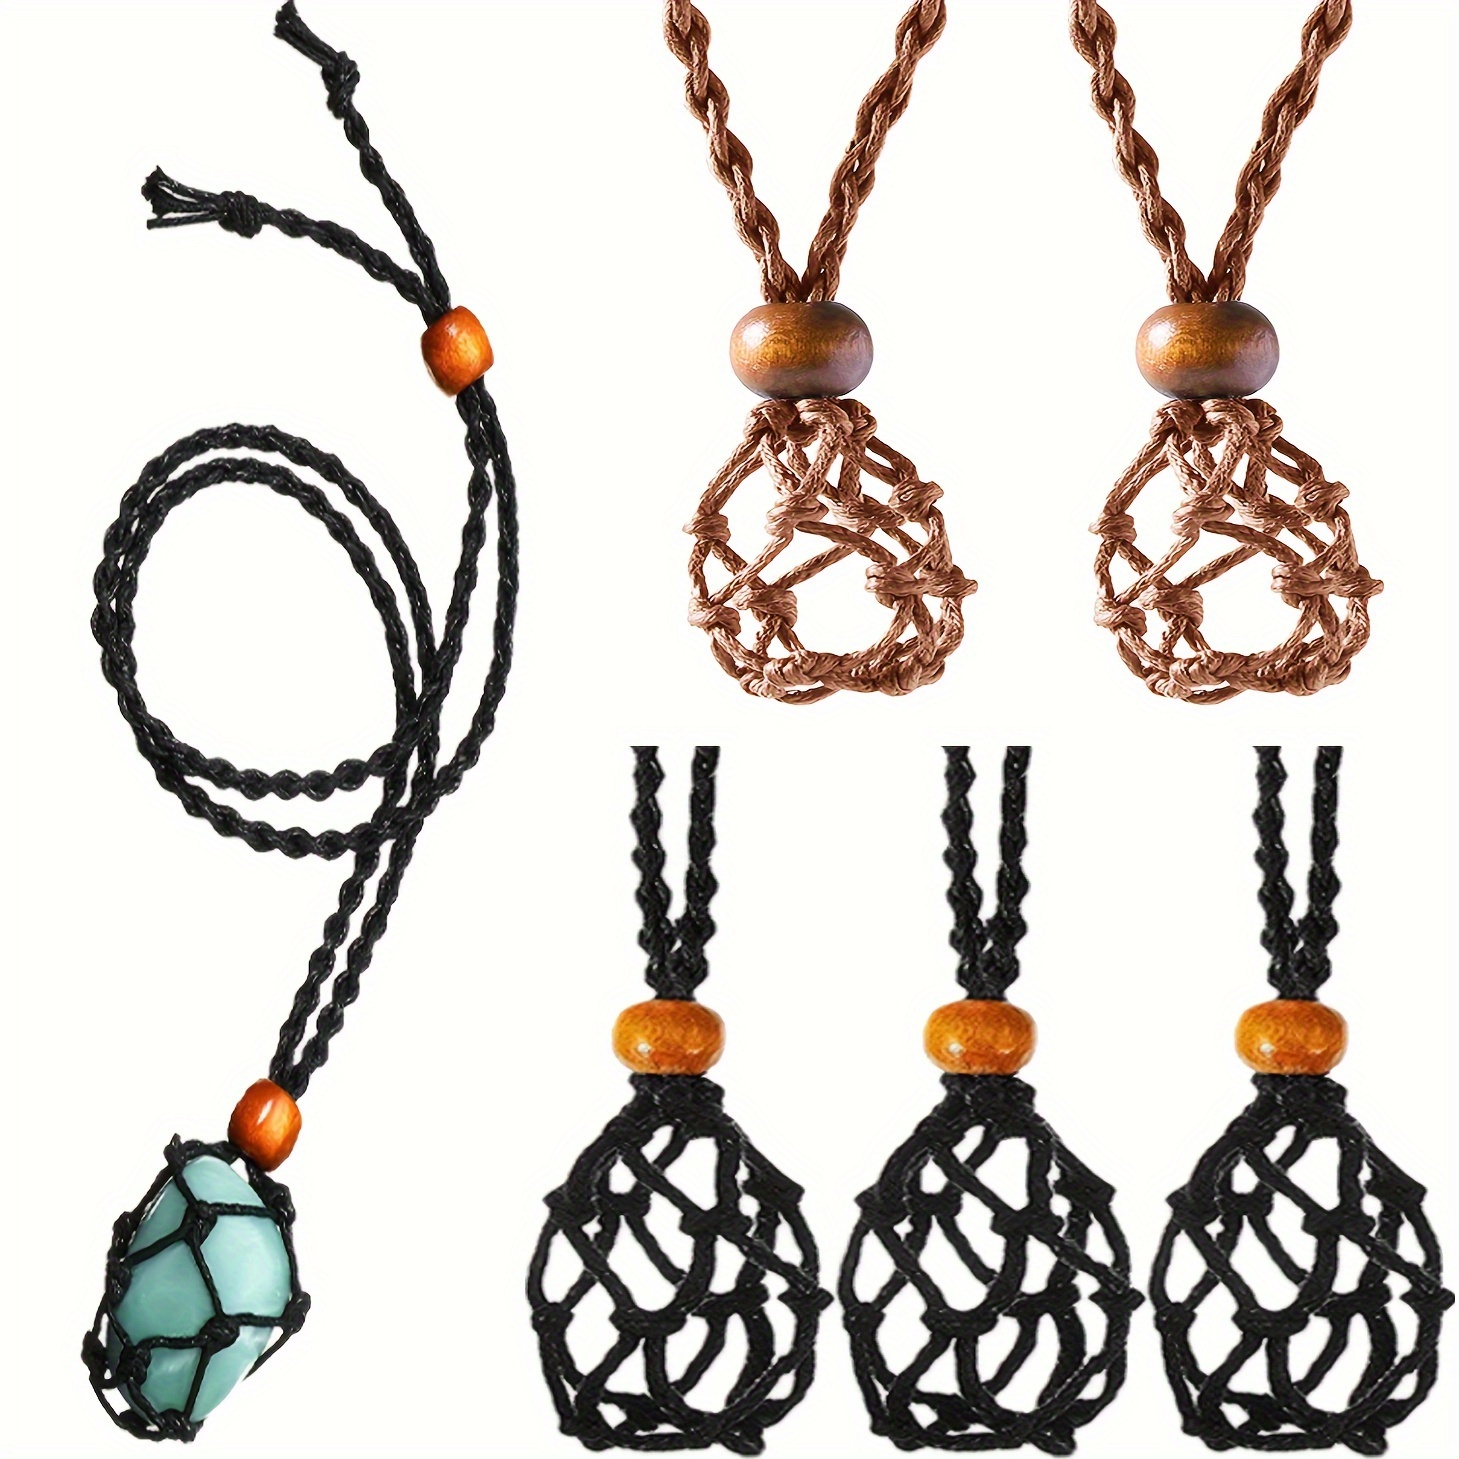 60Pcs Spiral Bead Cage Pendant Crystal Holder for Necklace Making Crystal  Holder